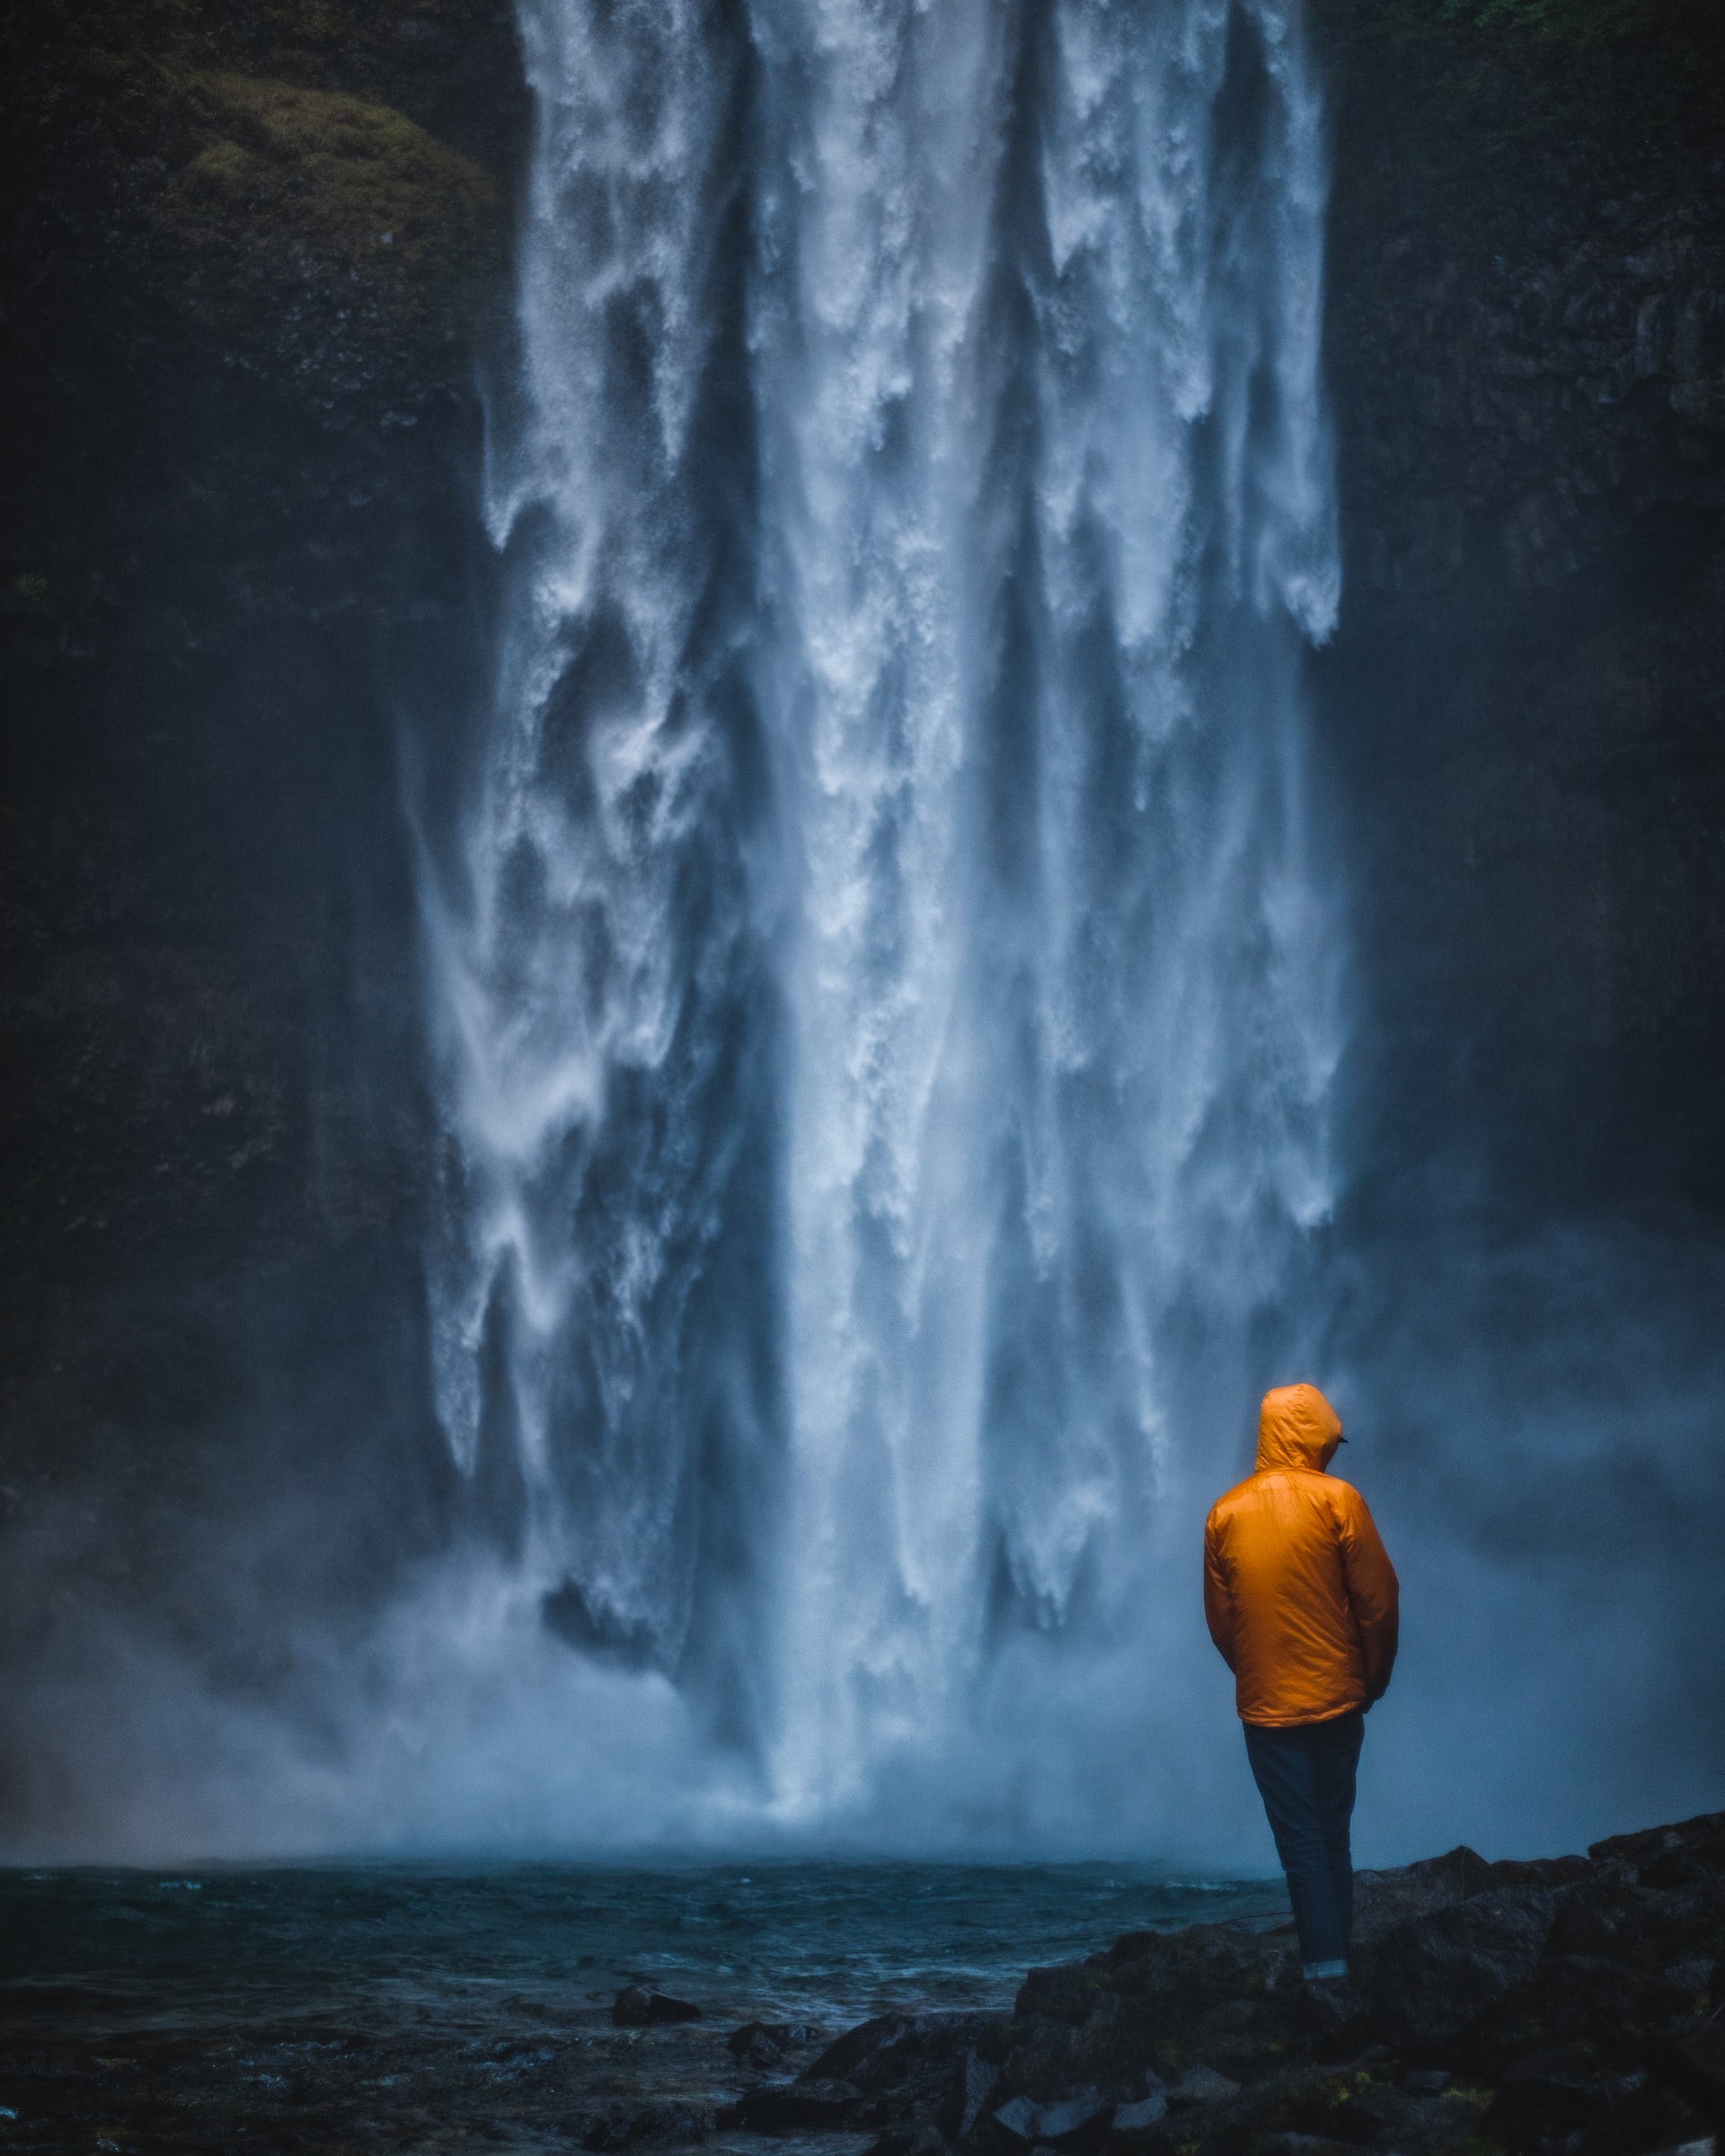 dark waterfall with yellow raincoat-clad figure before it